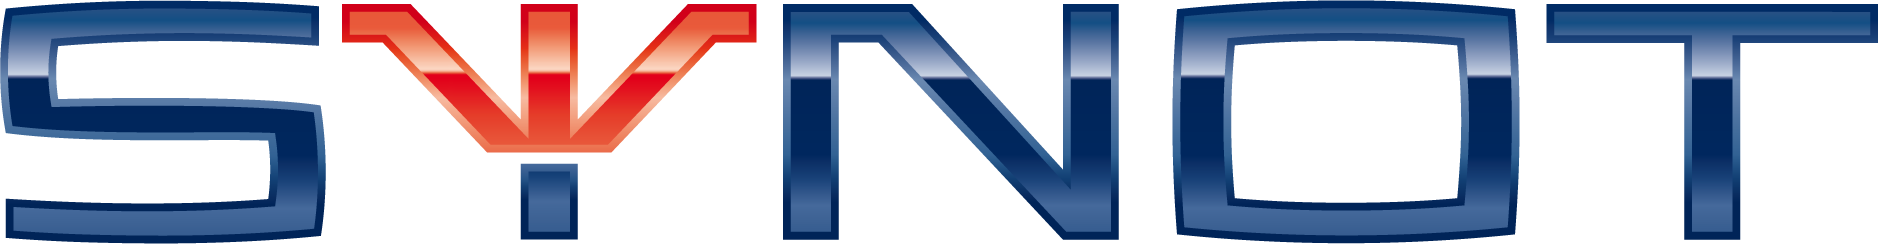 Synot_logo_final_tmave modre s prechodem